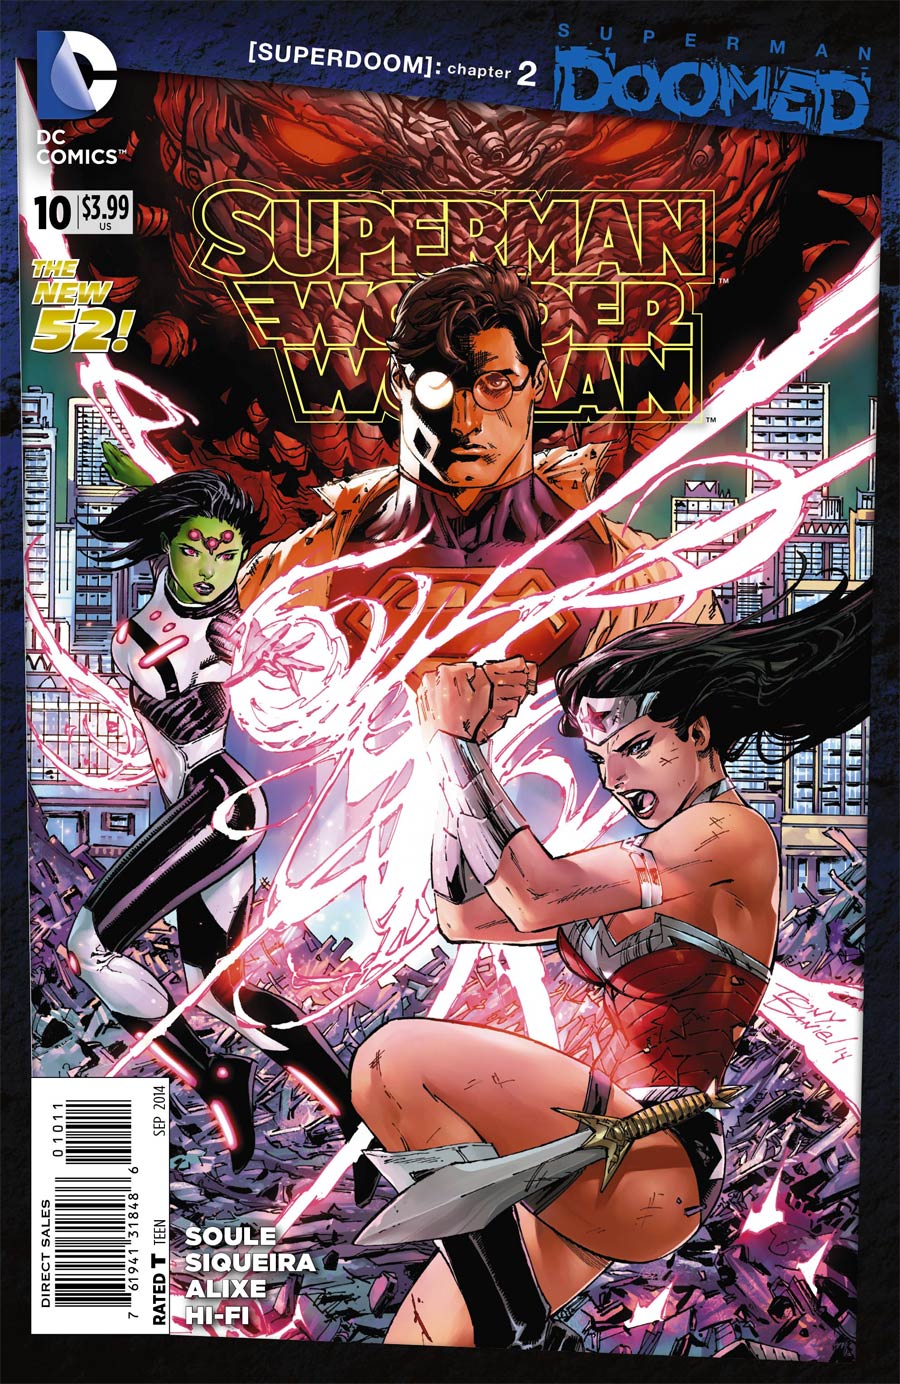 Superman Wonder Woman #10 Cover A Regular Tony S Daniel Cover (Superman Doomed Tie-In)